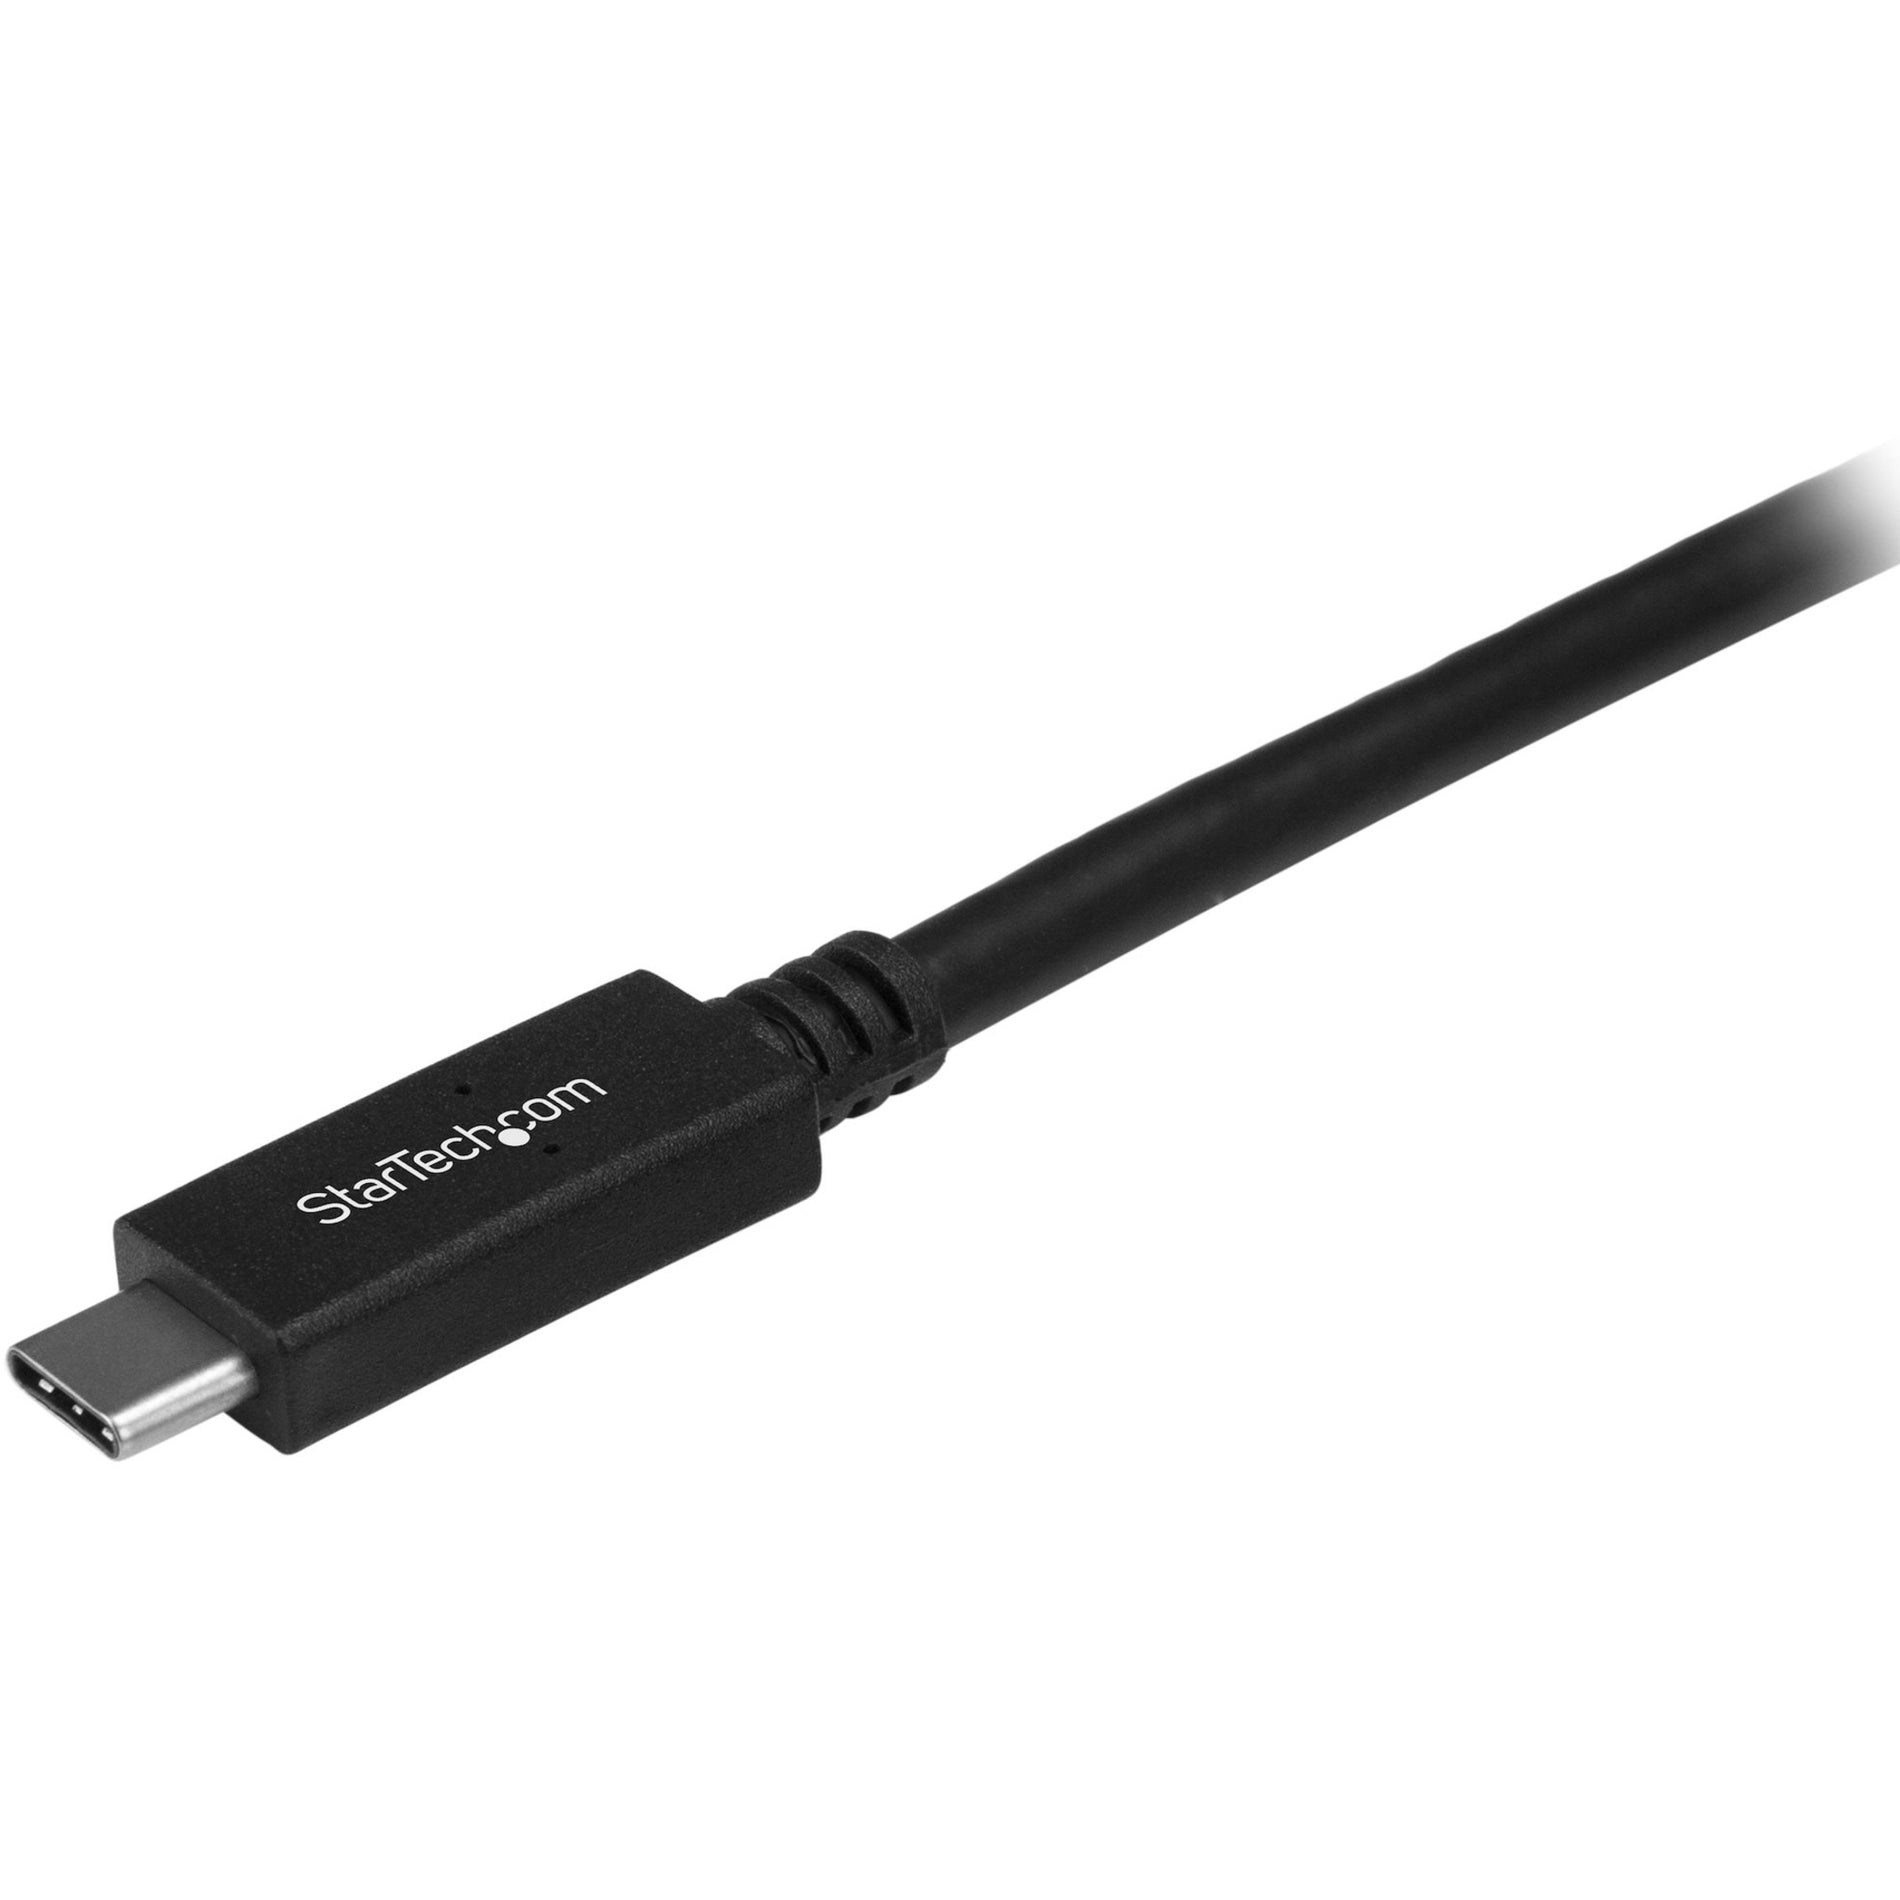 StarTech.com: スタートレック・ドットコム  USB31CC1M: USB31CC1M  1m: 1メートル  (3ft): (3フィート)  USB-C Cable: USB-Cケーブル  USB Type-C: USB Type-C  USB 3.1 Gen 2: USB 3.1 第2世代 10Gbps Cable: 10Gbps ケーブル